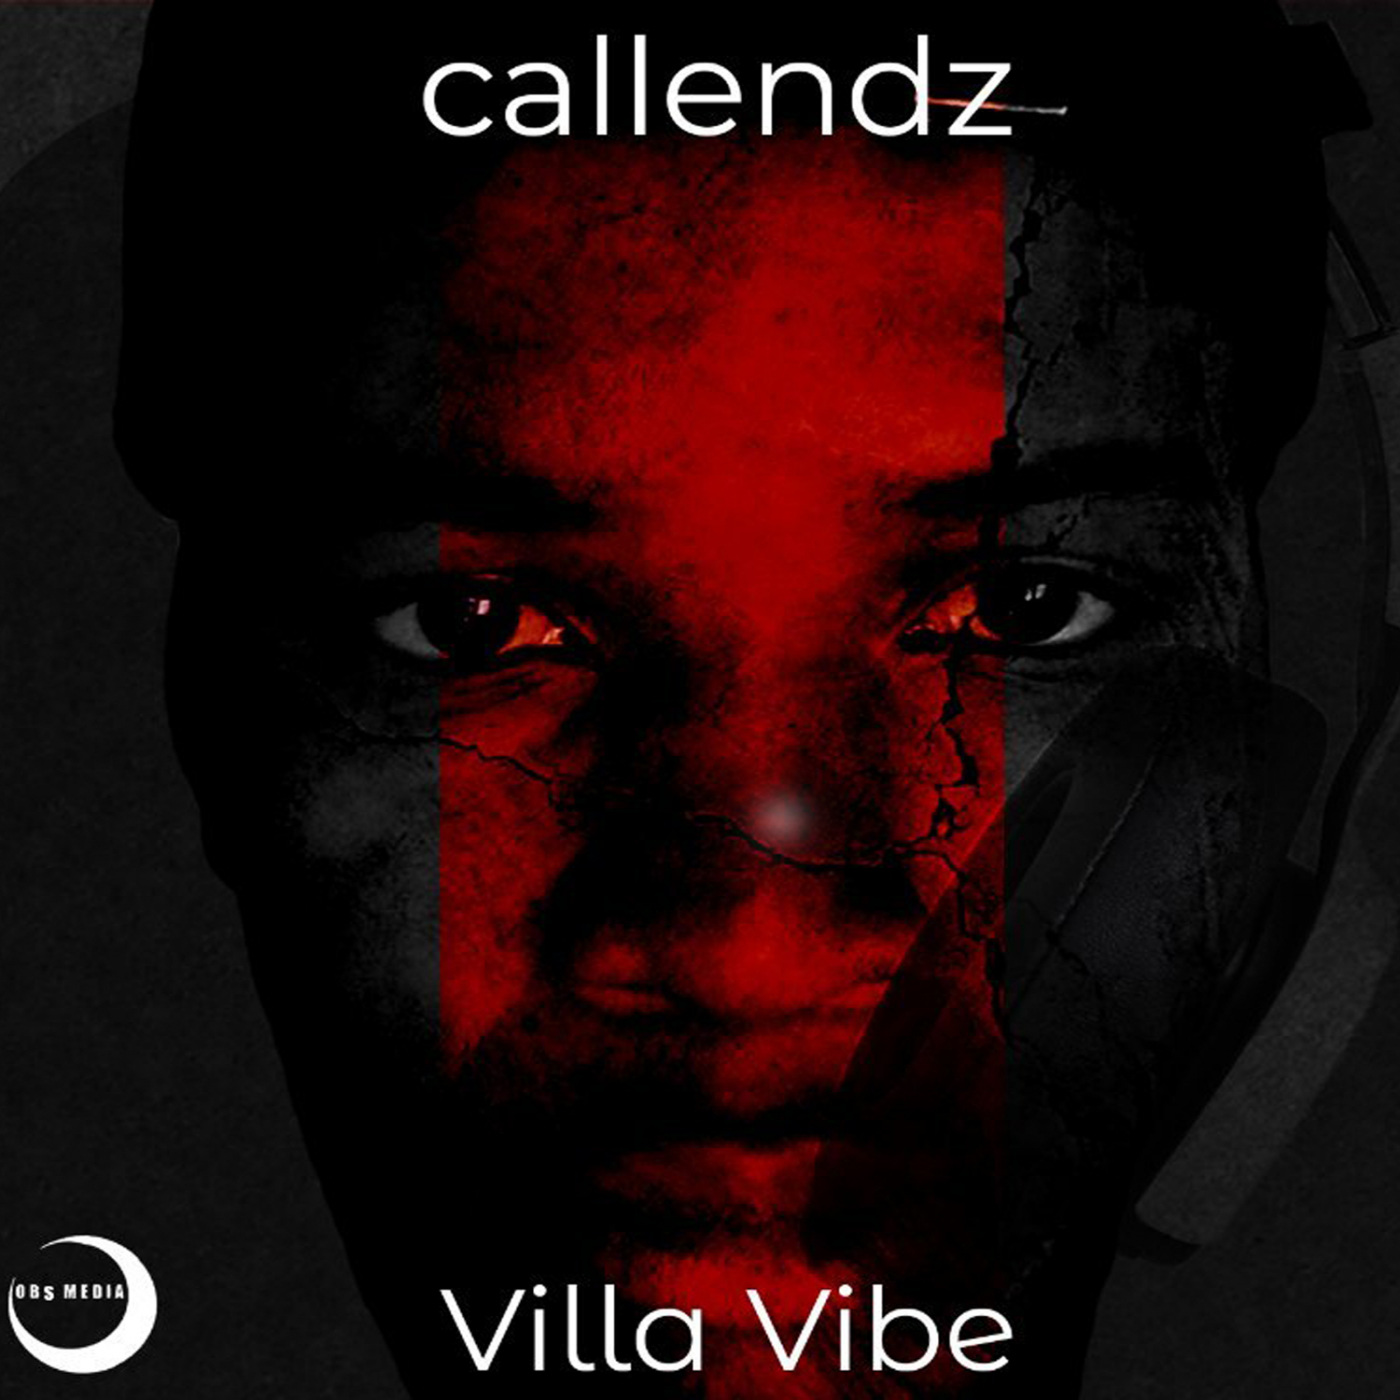 Callendz - Villa Vibe / OBS Media